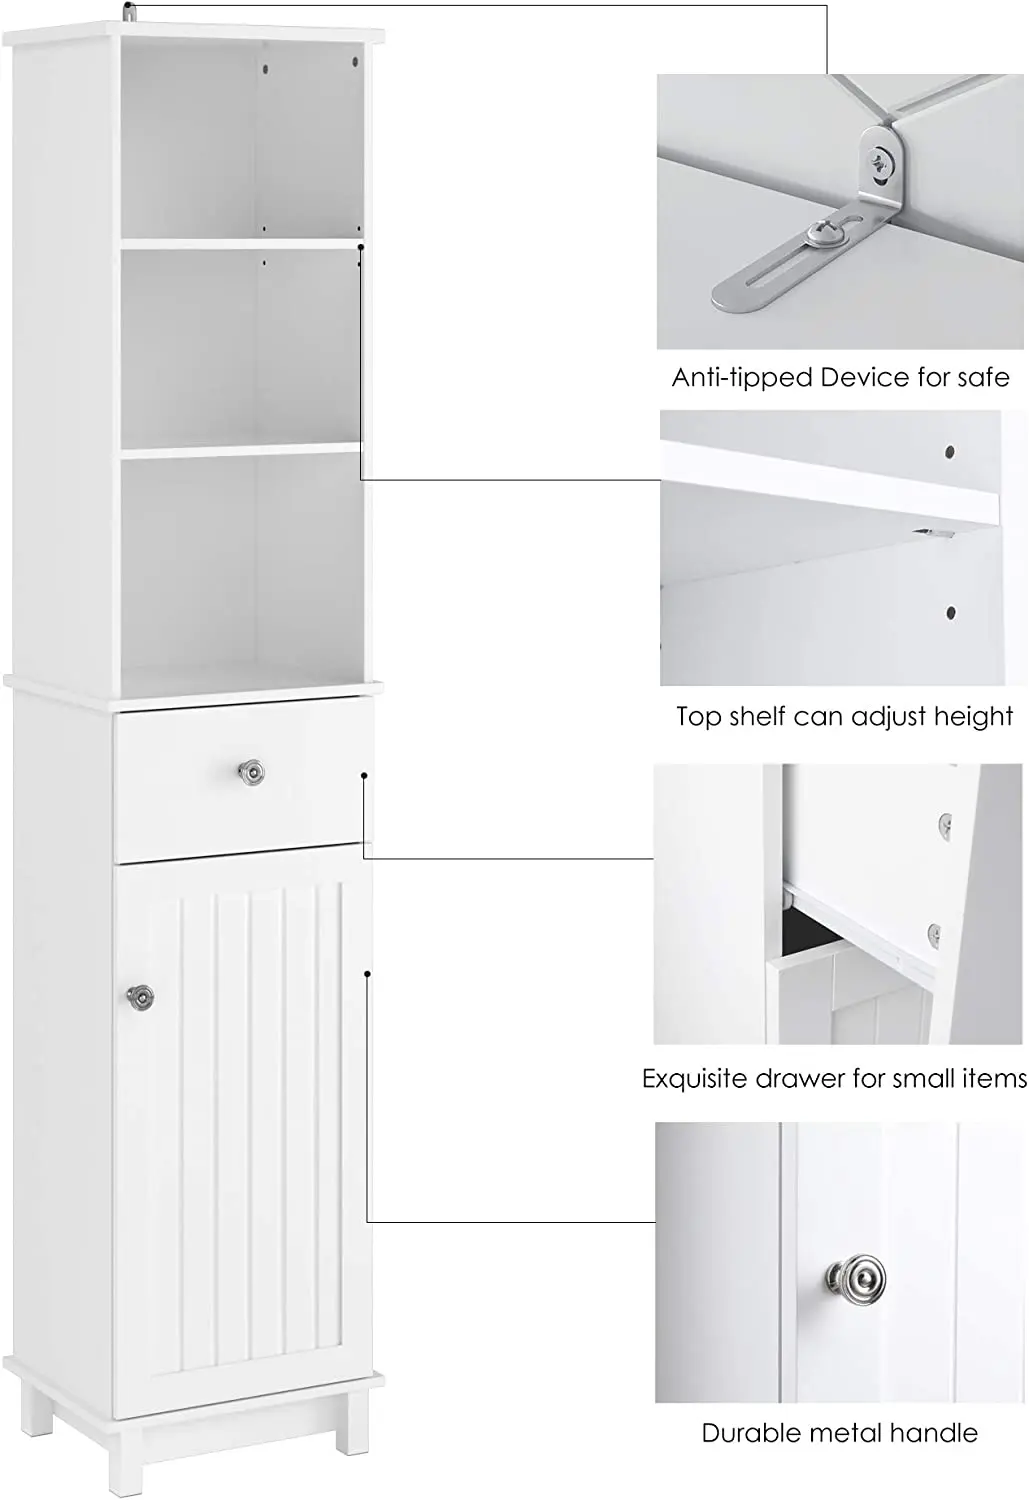 https://ae01.alicdn.com/kf/S3eea008ce1574f4faa504f264167f17aj/Tall-Bathroom-Storage-Cabinet-Floor-Standing-Organizer-Rack-3-Tier-Shelves-White.jpg